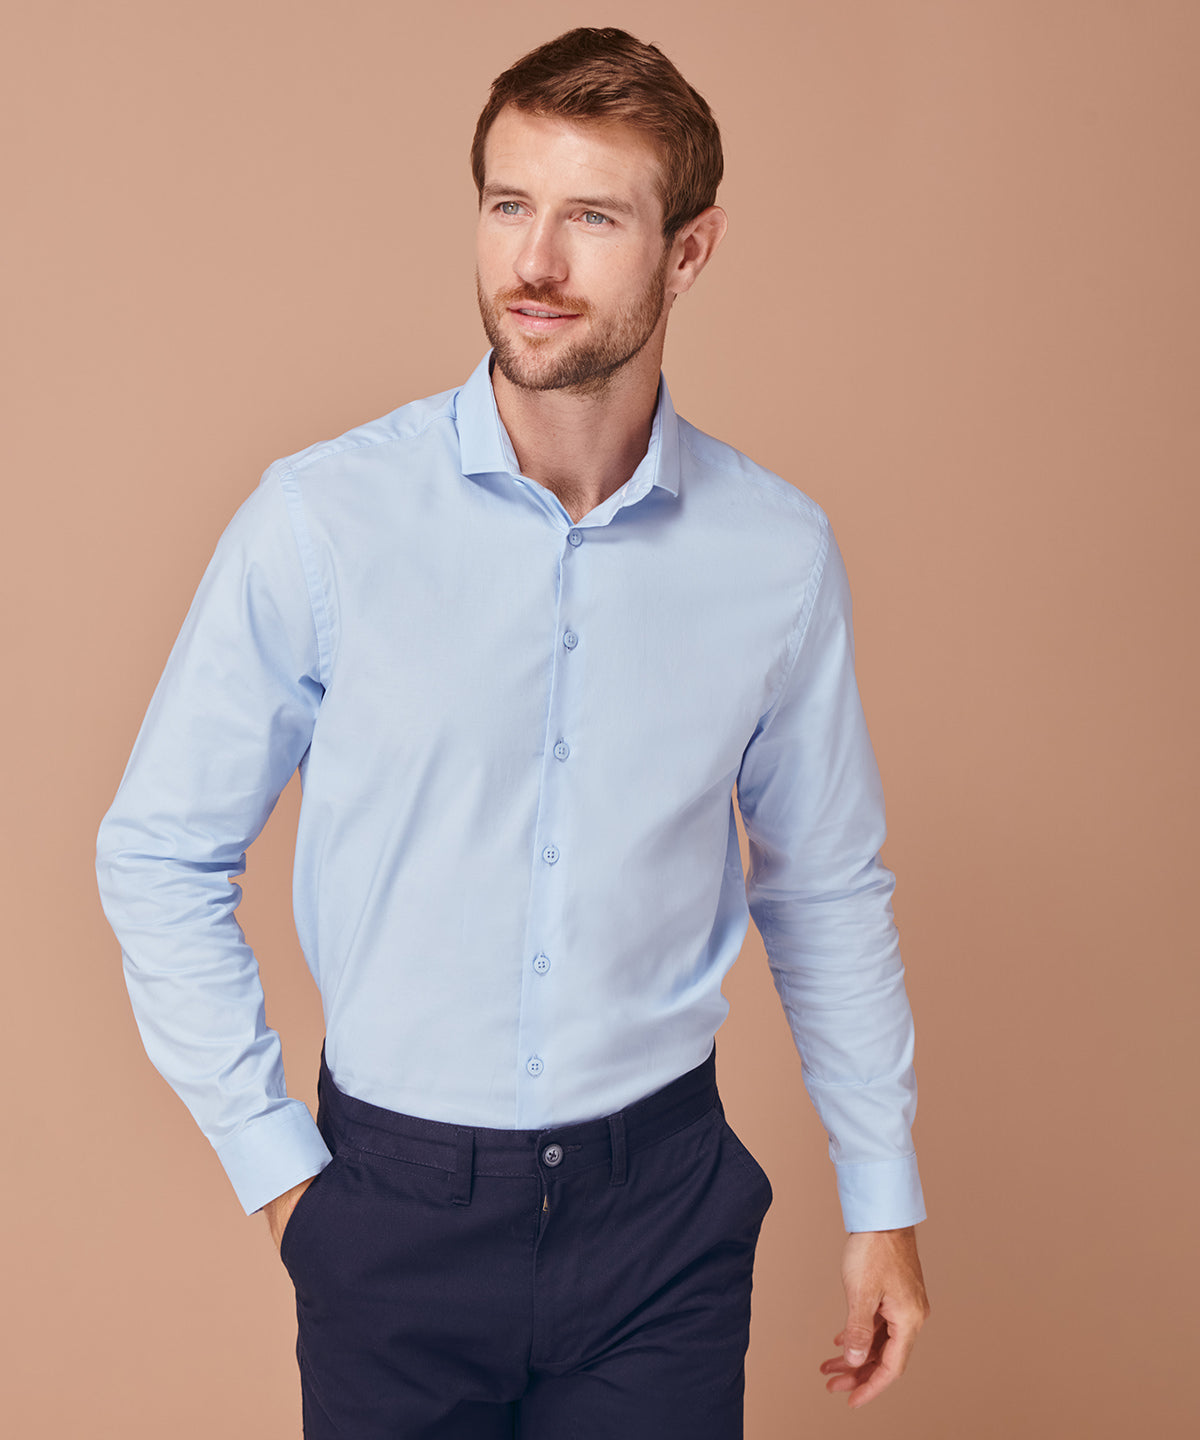 Bolir - Long Sleeve Stretch Shirt